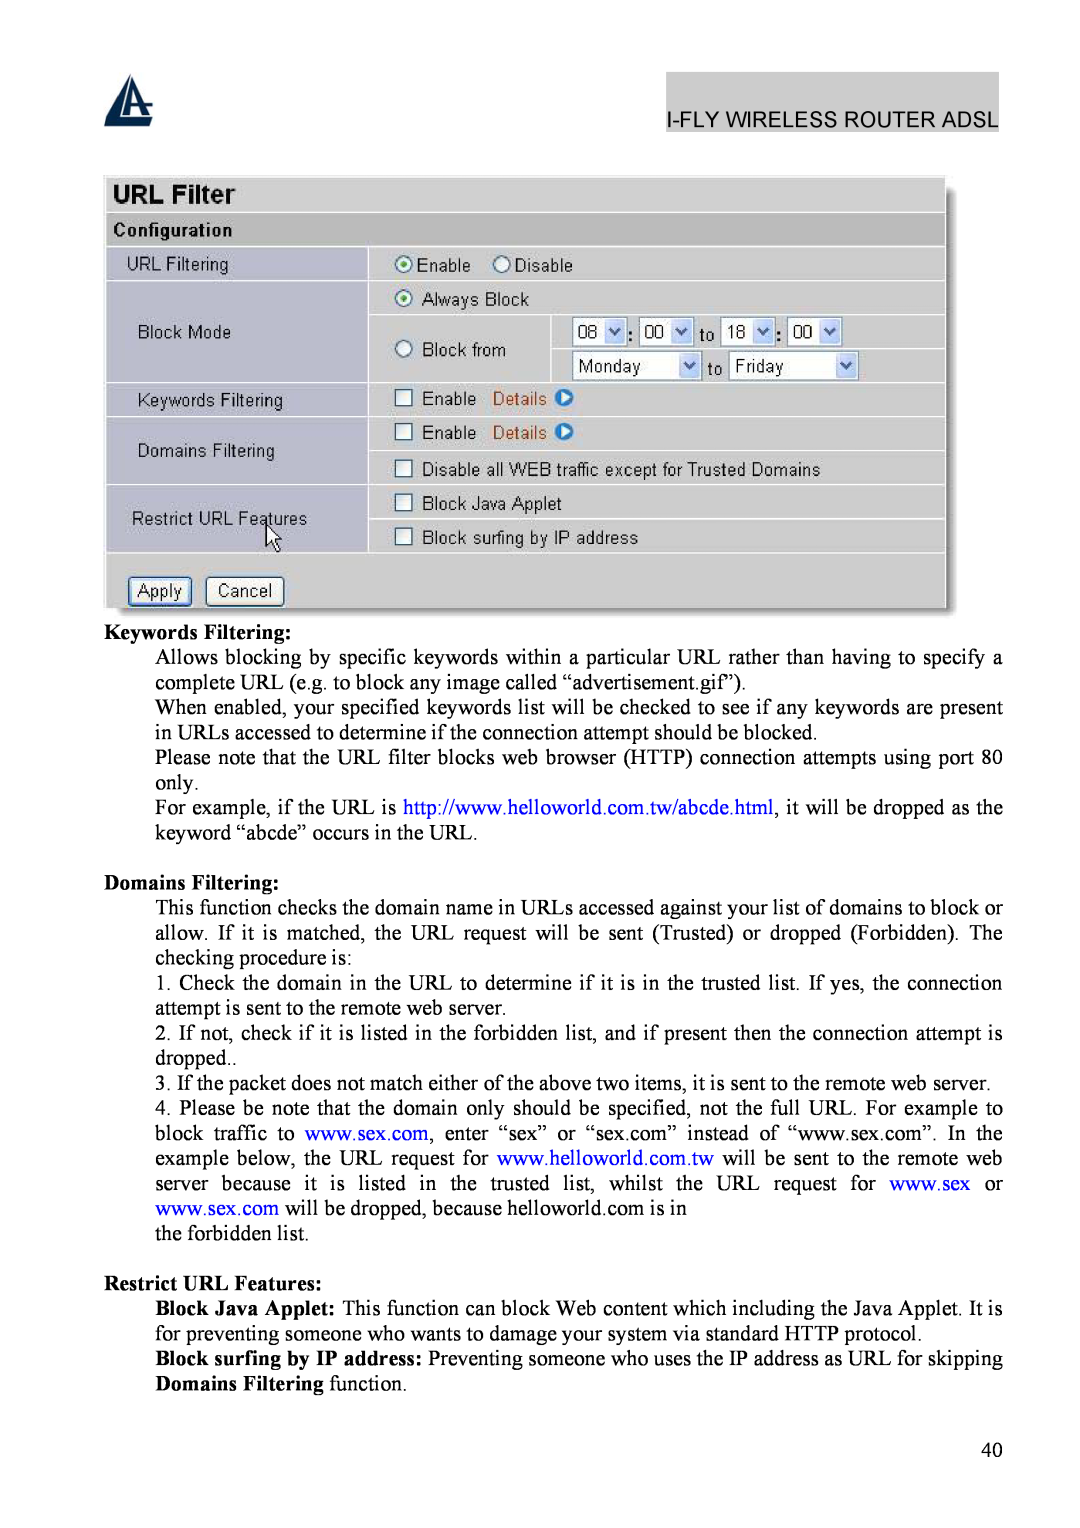 Atlantis Land A02-WRA4-54G manual Keywords Filtering, Domains Filtering, Restrict URL Features 